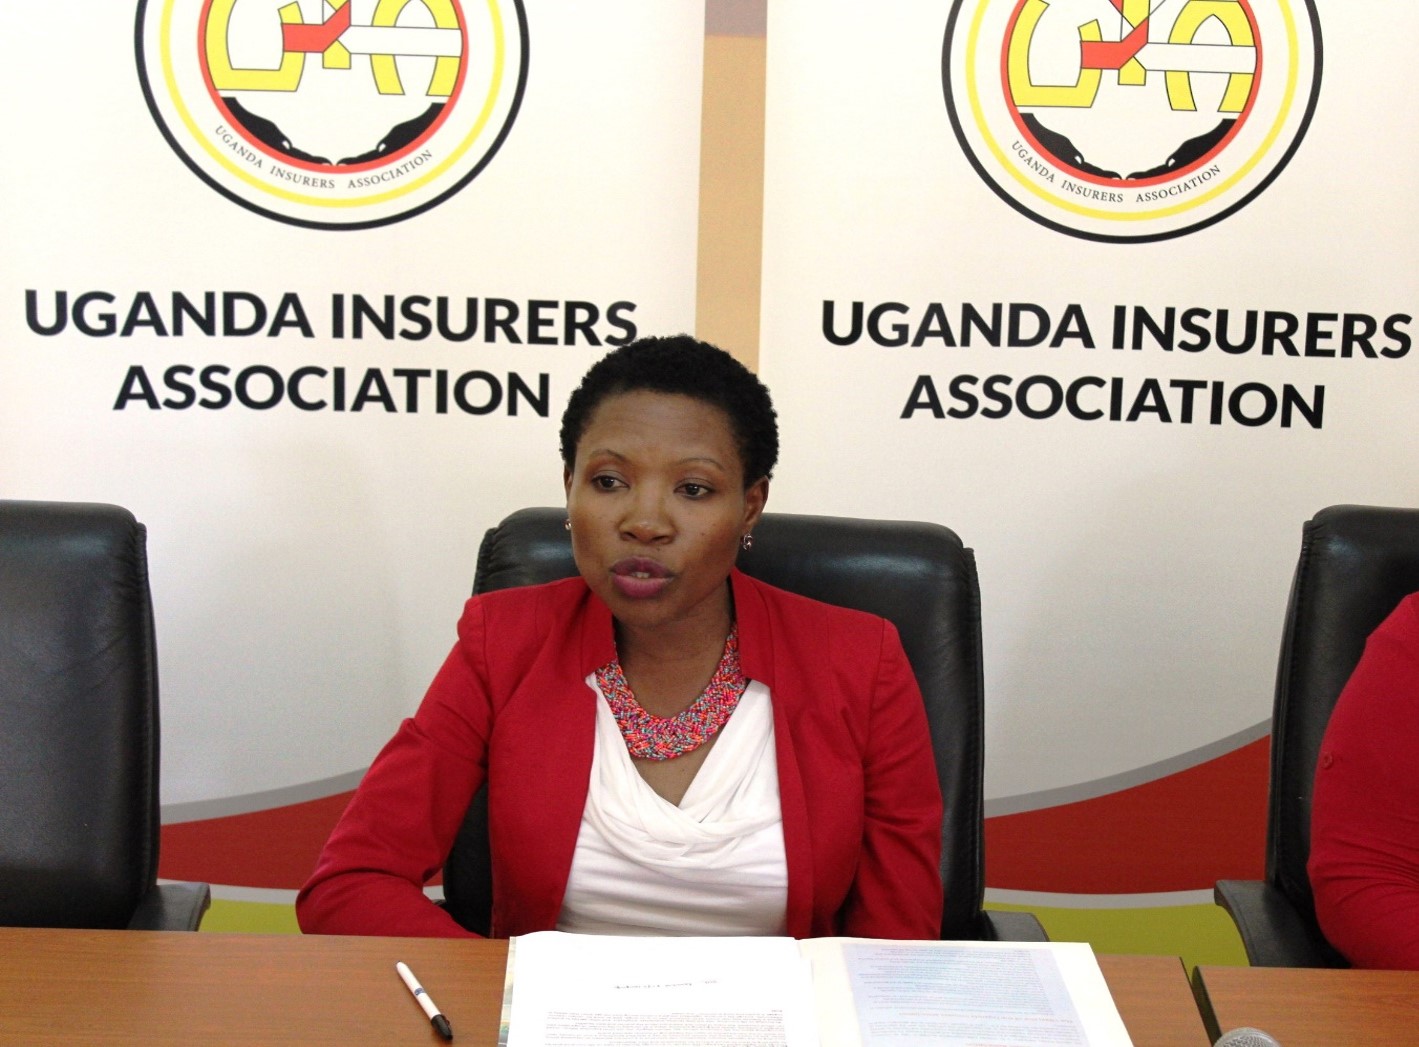 UIA in Life Insurance Digital Campaign